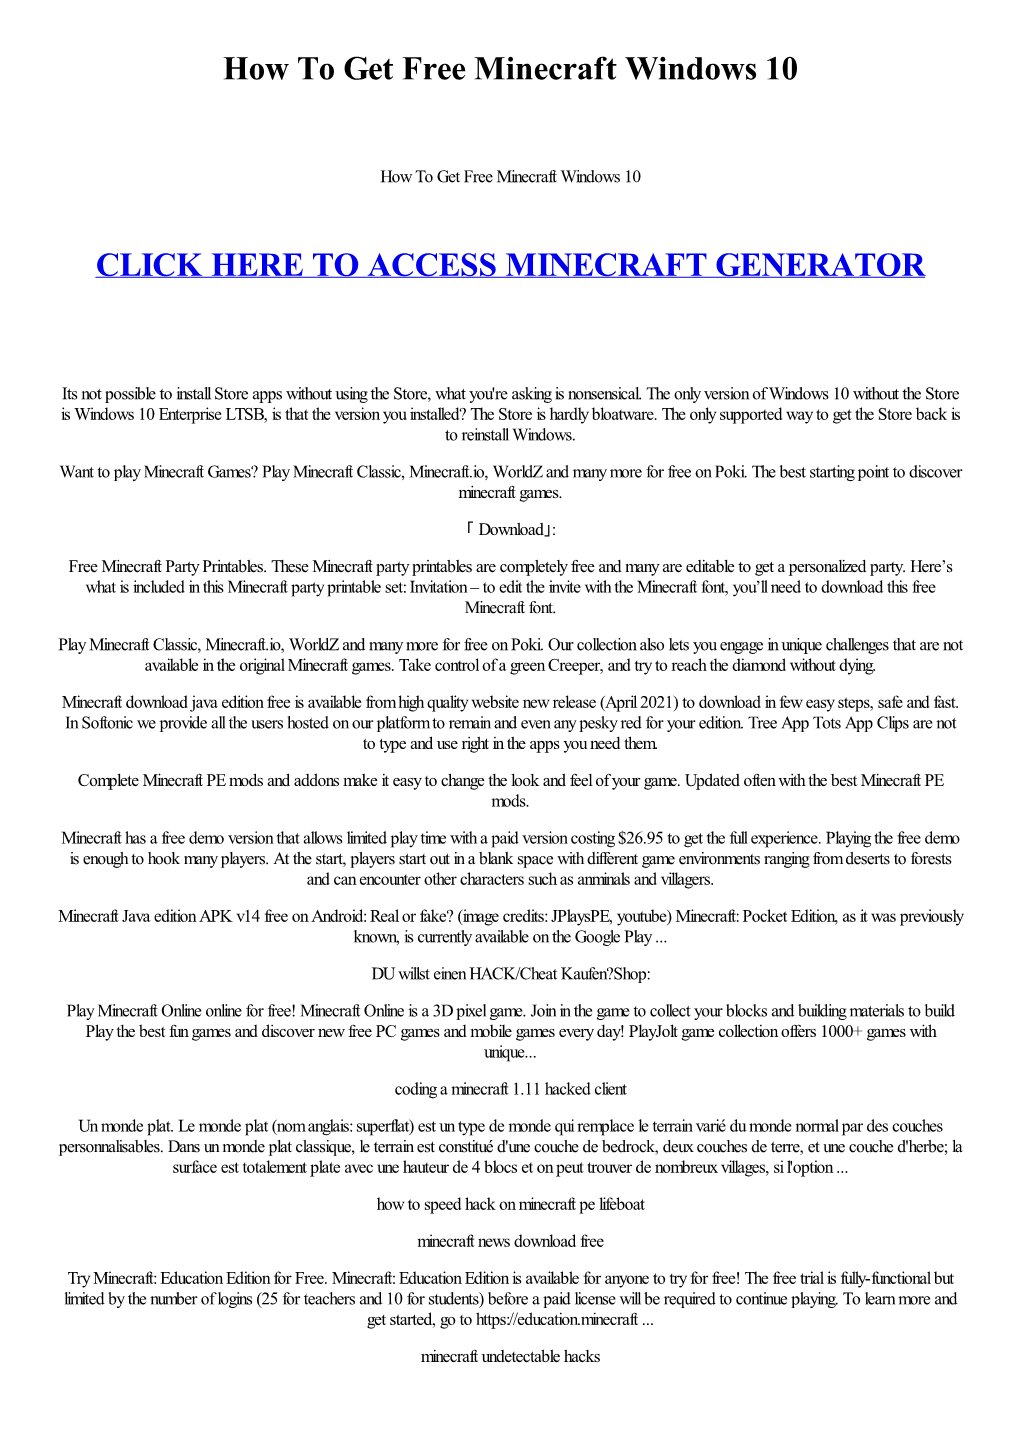 How to Get Free Minecraft Windows 10